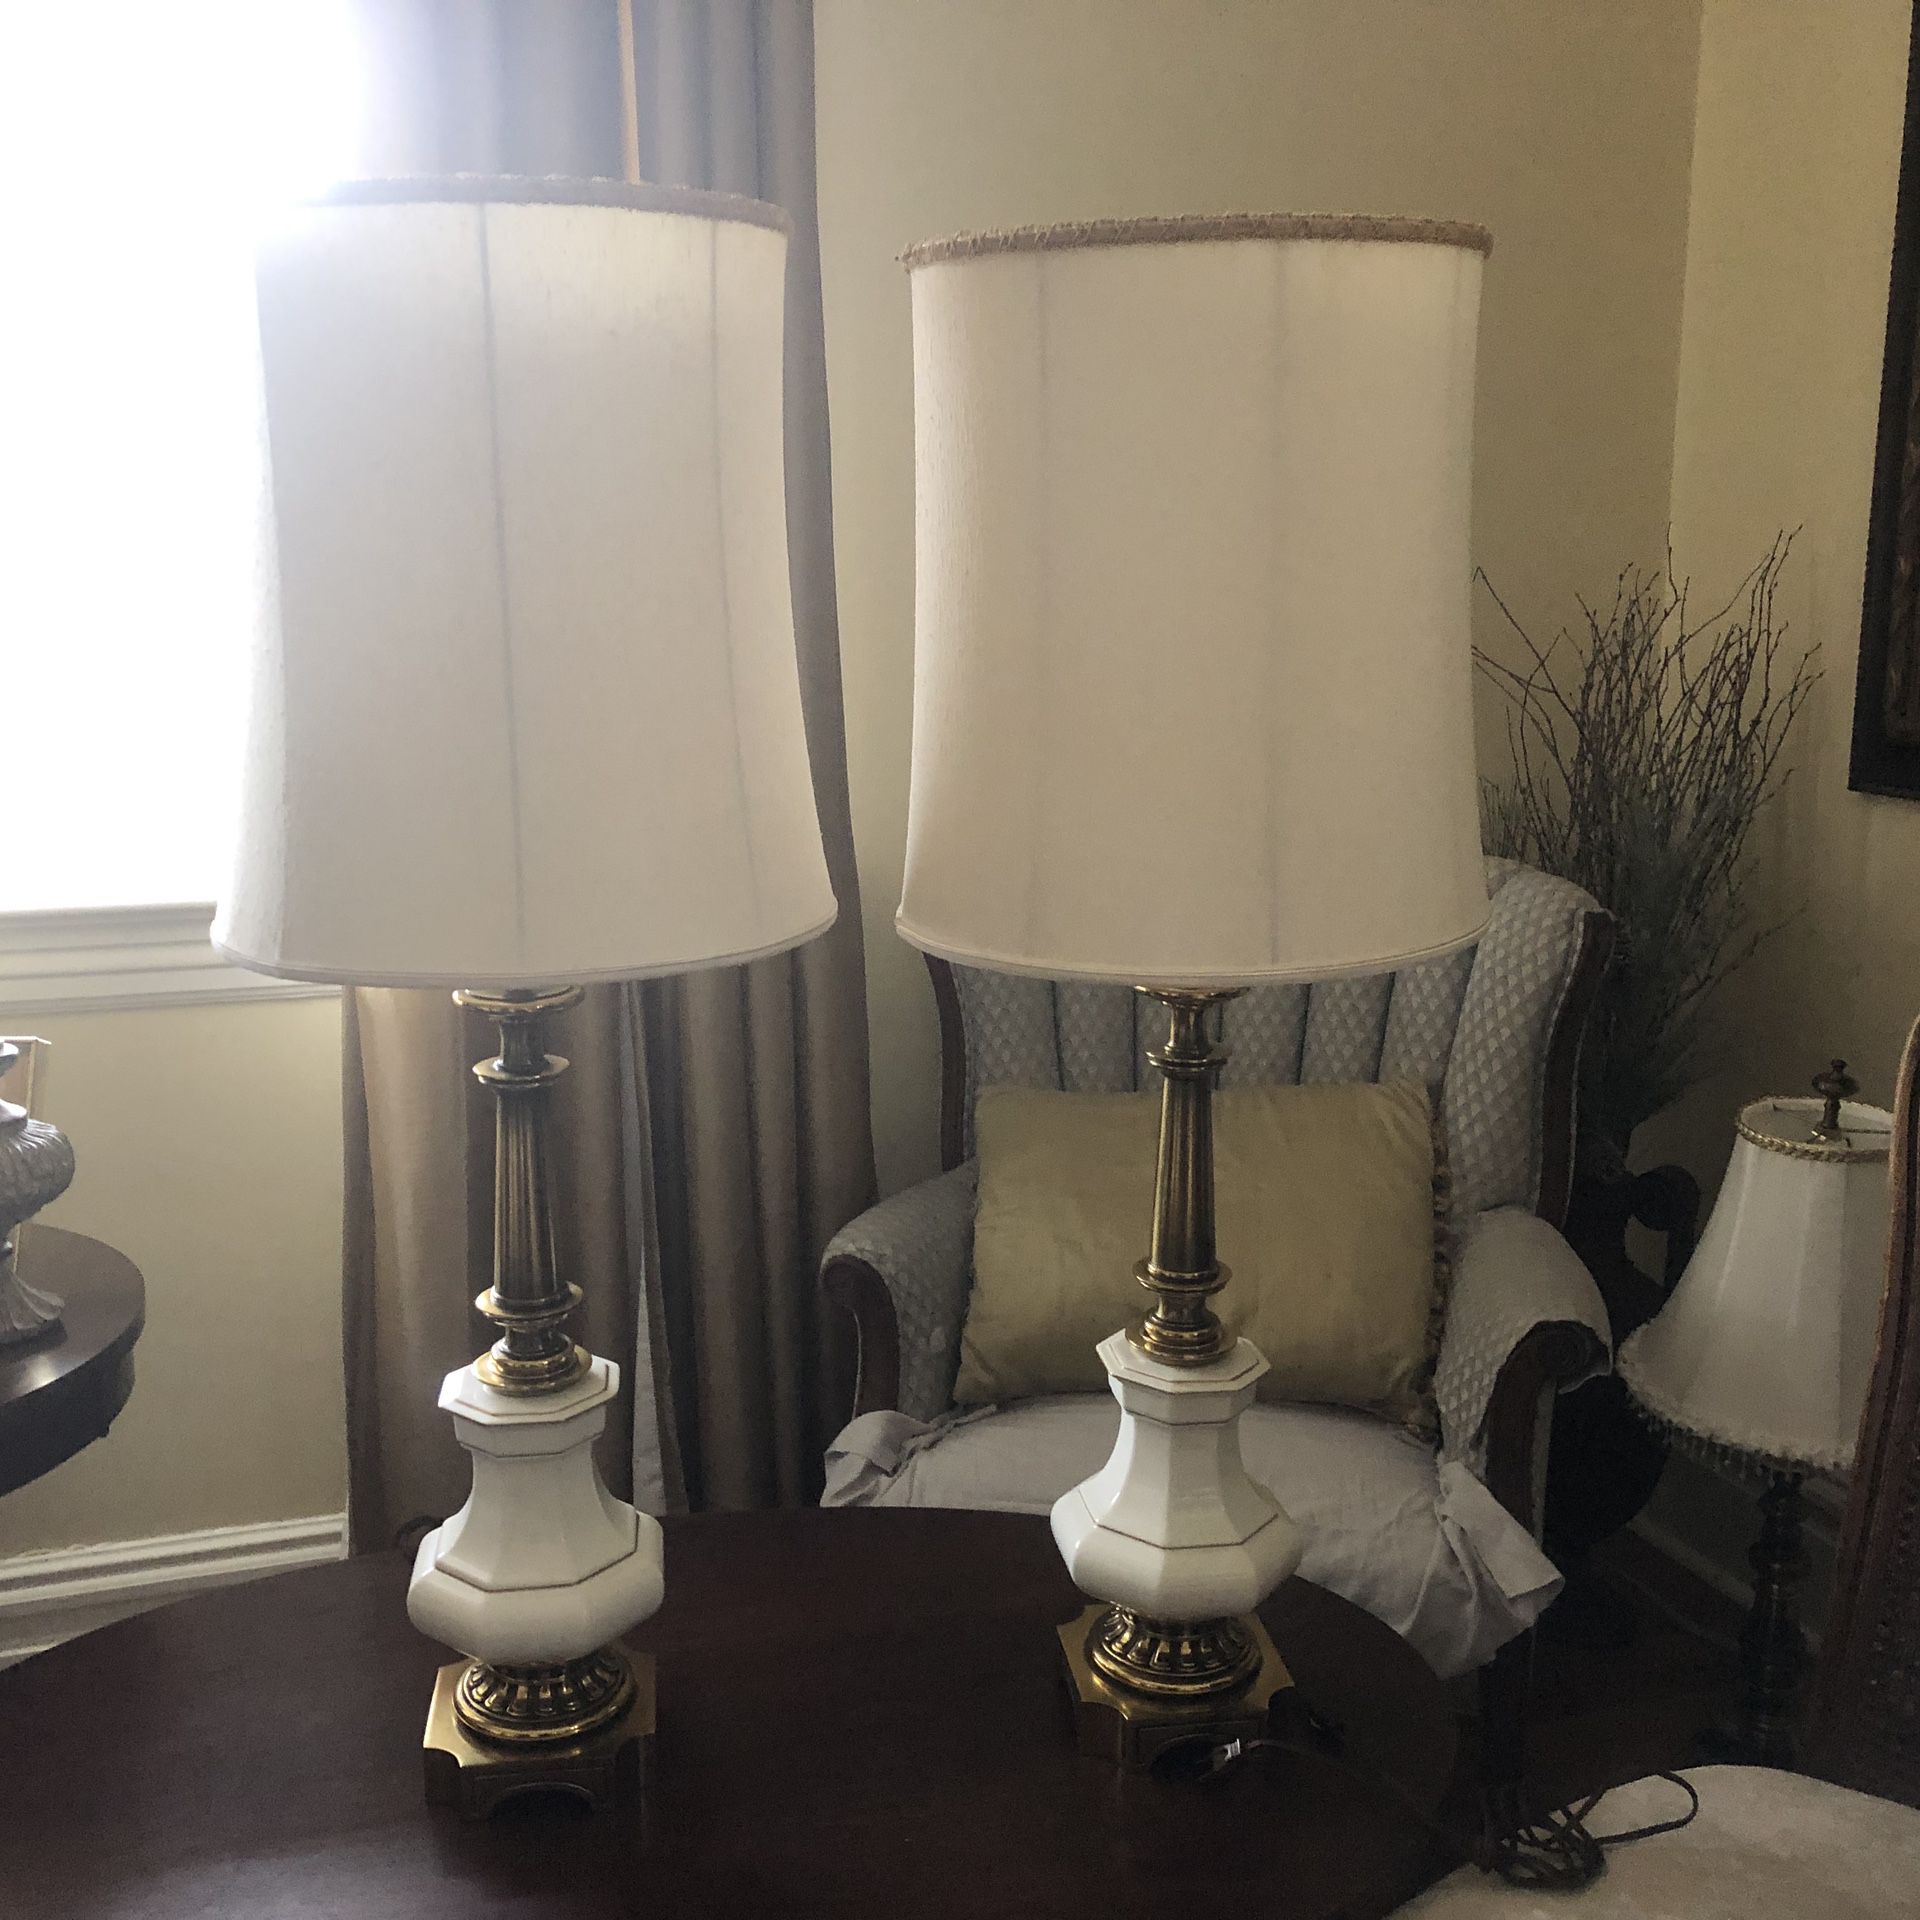 Pair of antique Stiffel lamps with Stiffel shades